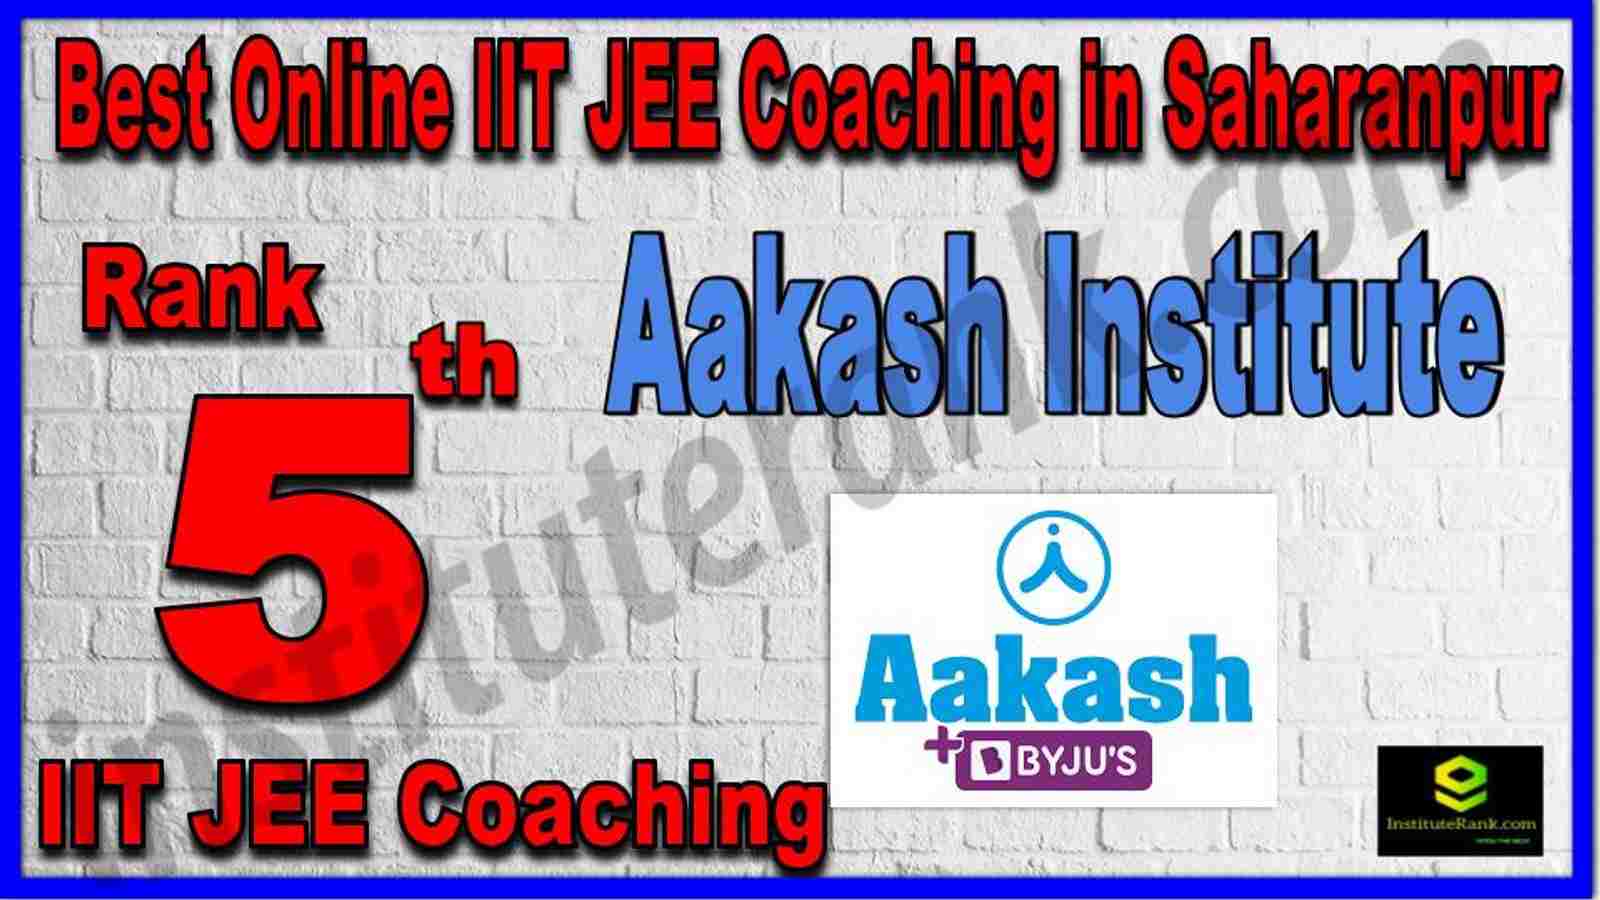 Rank 5th Best Online IIT JEE Coaching in Saharanpur